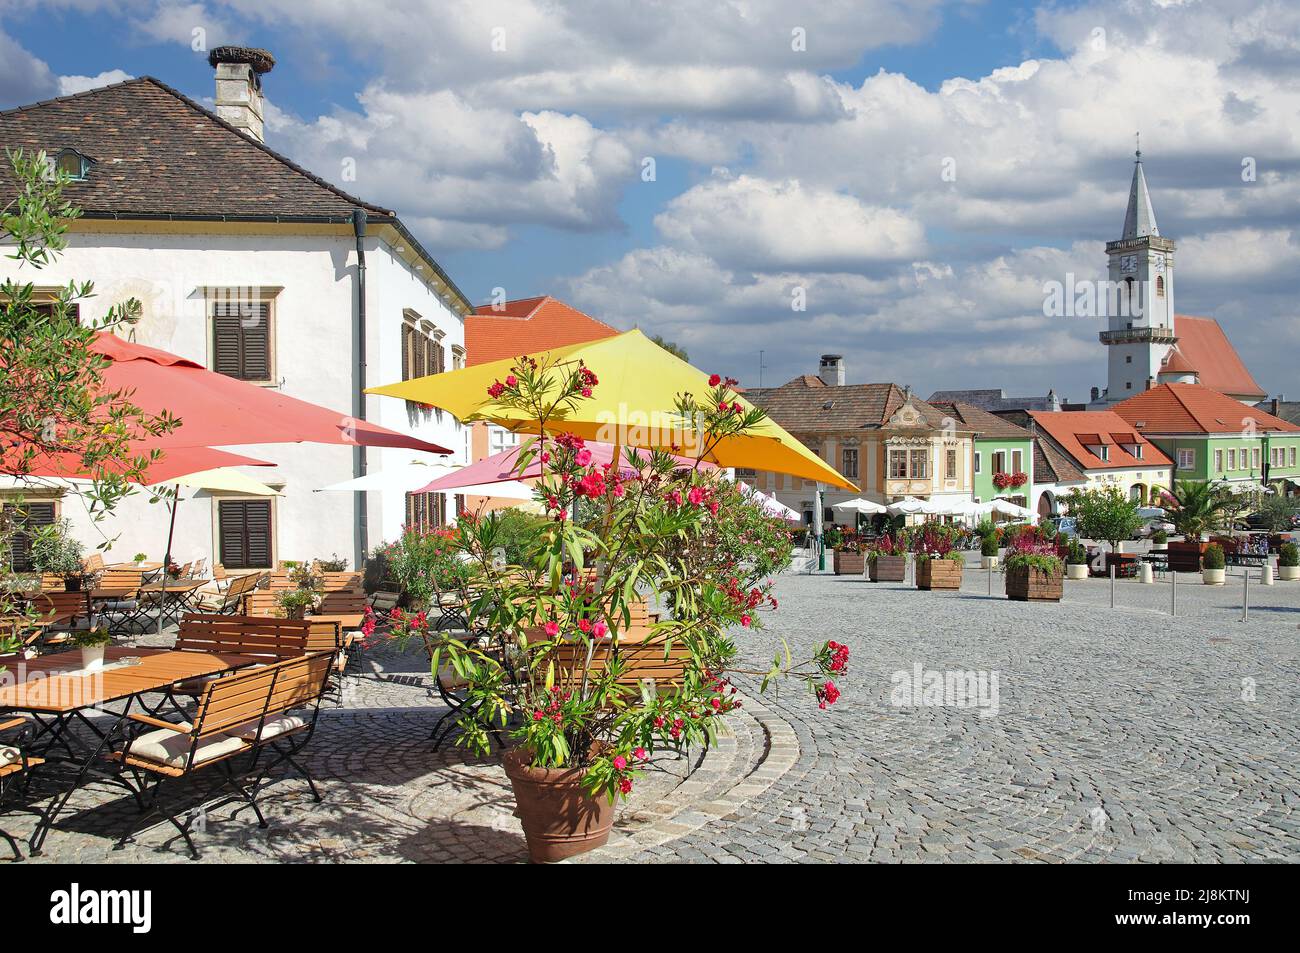 Village of Rust,Neusiedler See,Burgenland,Austria Stock Photo